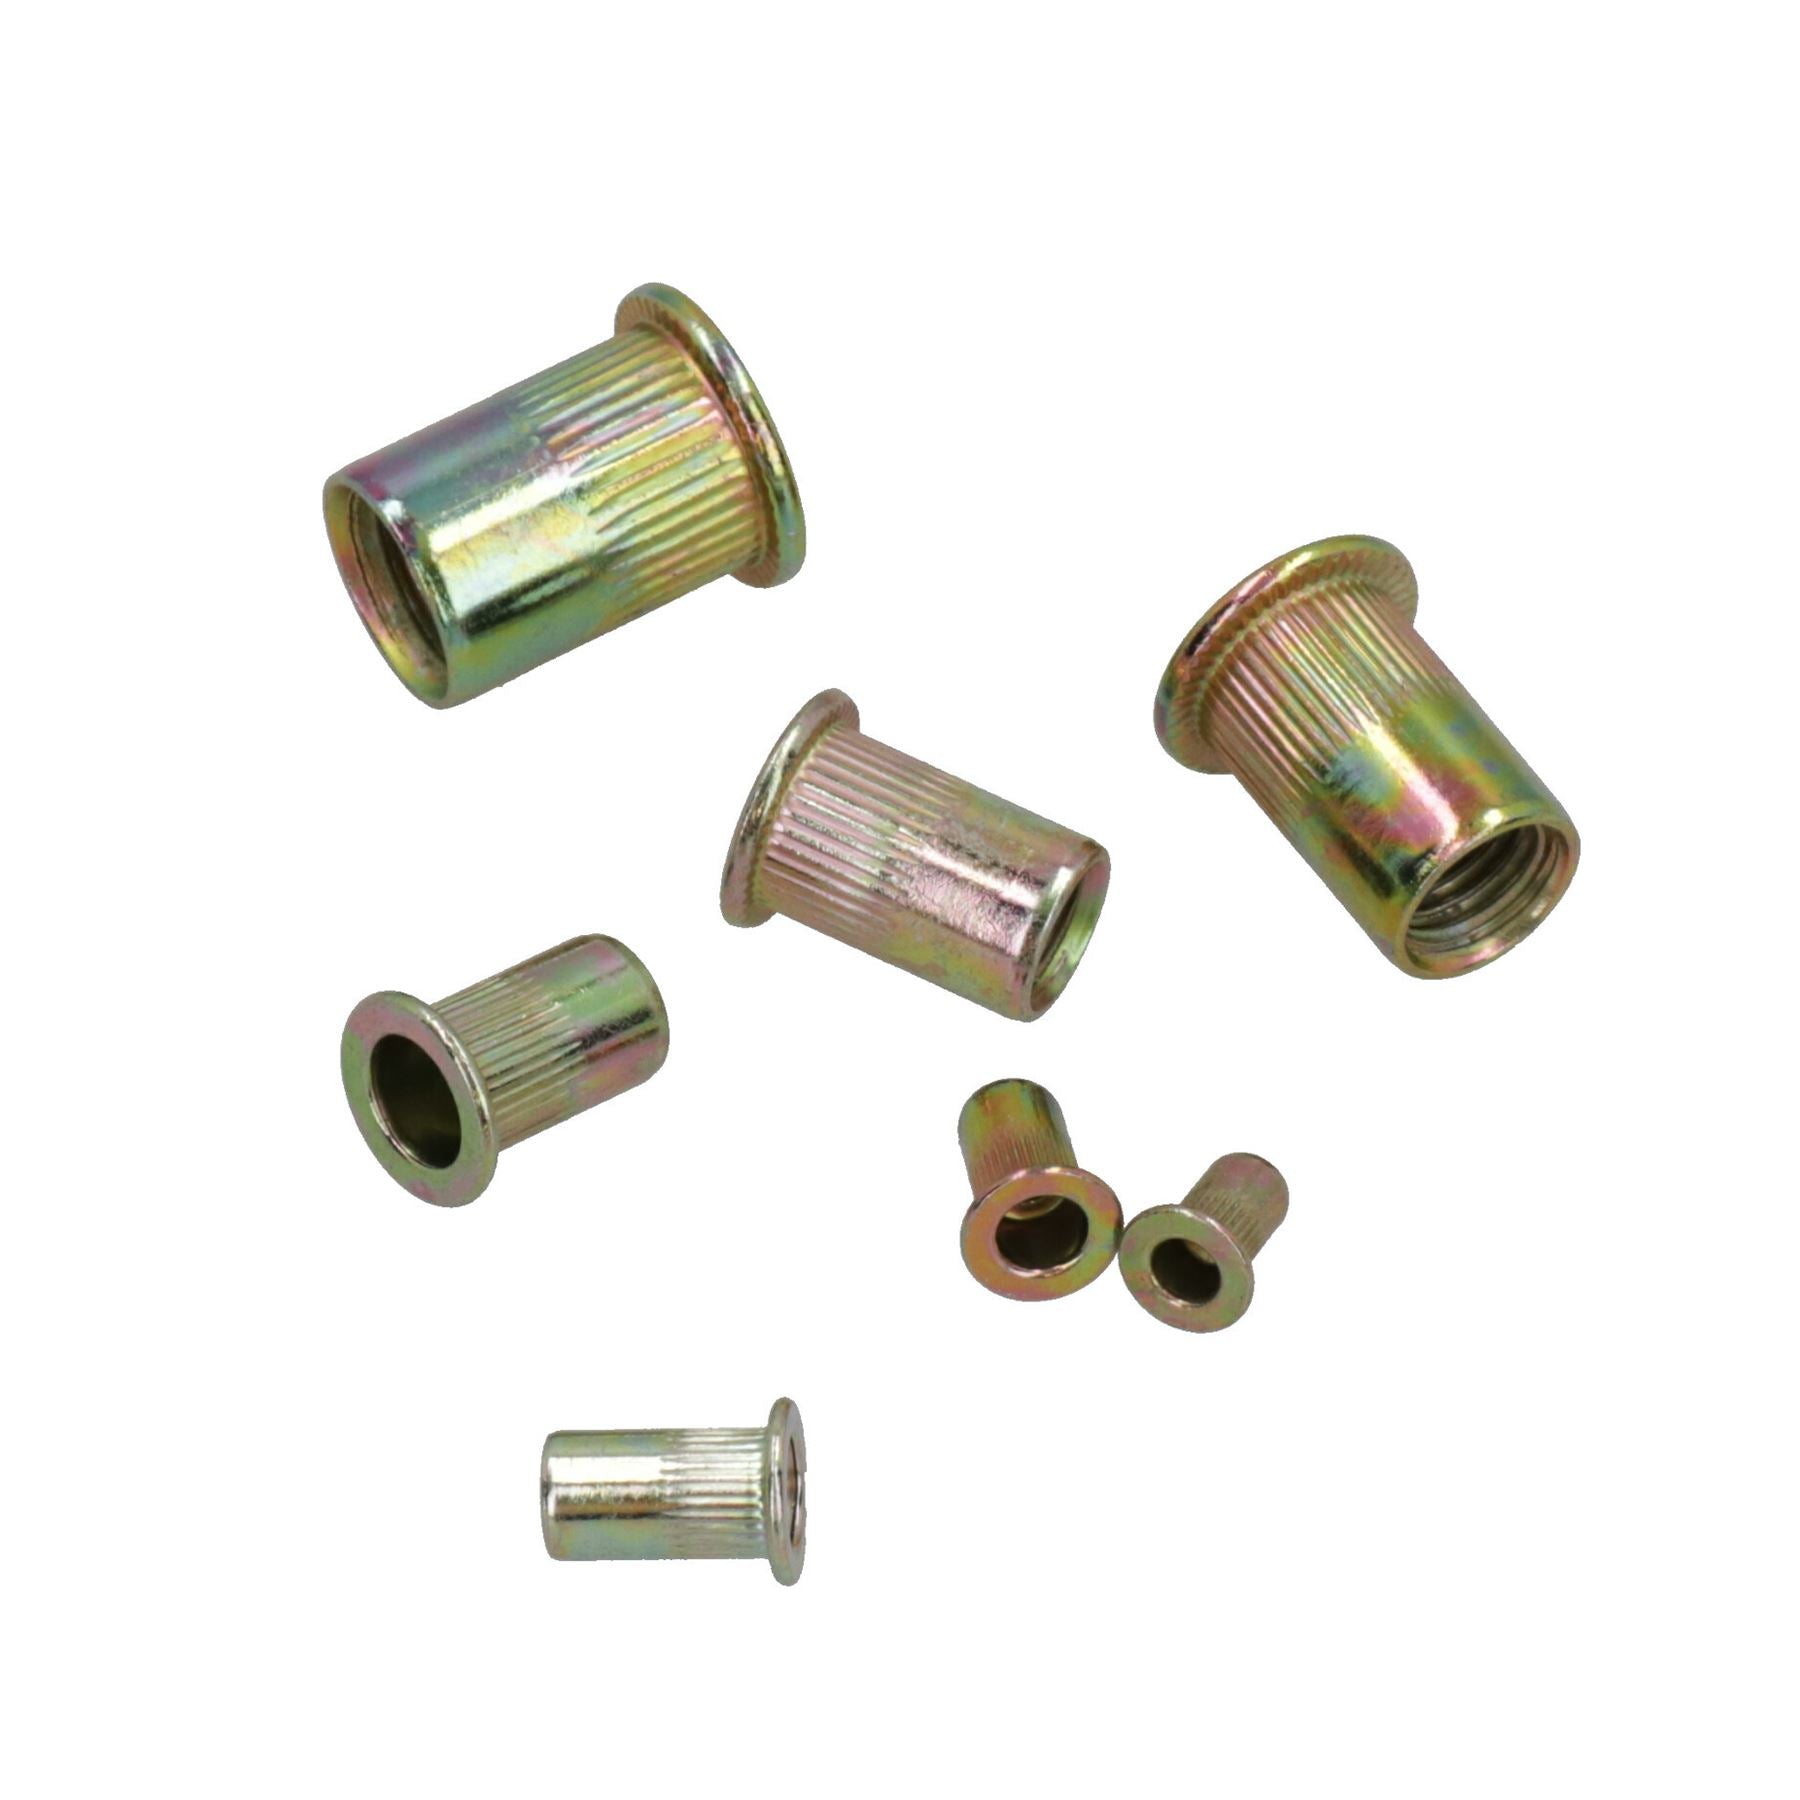 Steel Nut Serts Inserts Rivet Threaded Inserts Blindnut Fastener 3 – 12mm 158pc